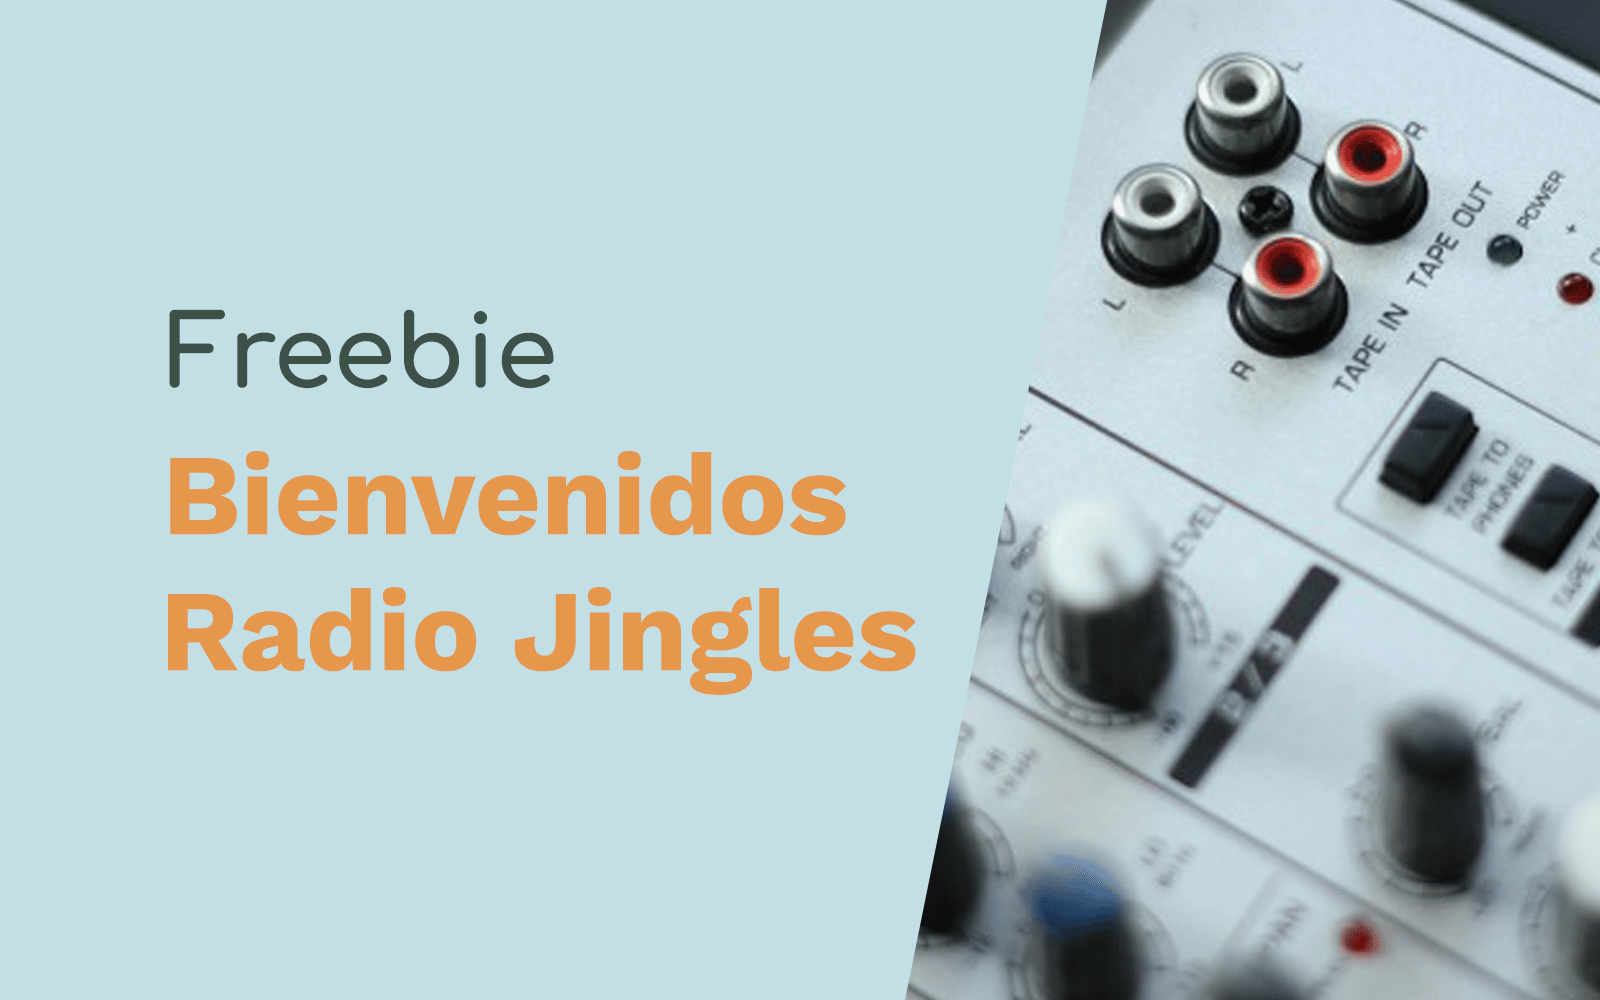 Free Radio Jingles – Bienvenidos Free Jingles radio jingles Music Radio Creative